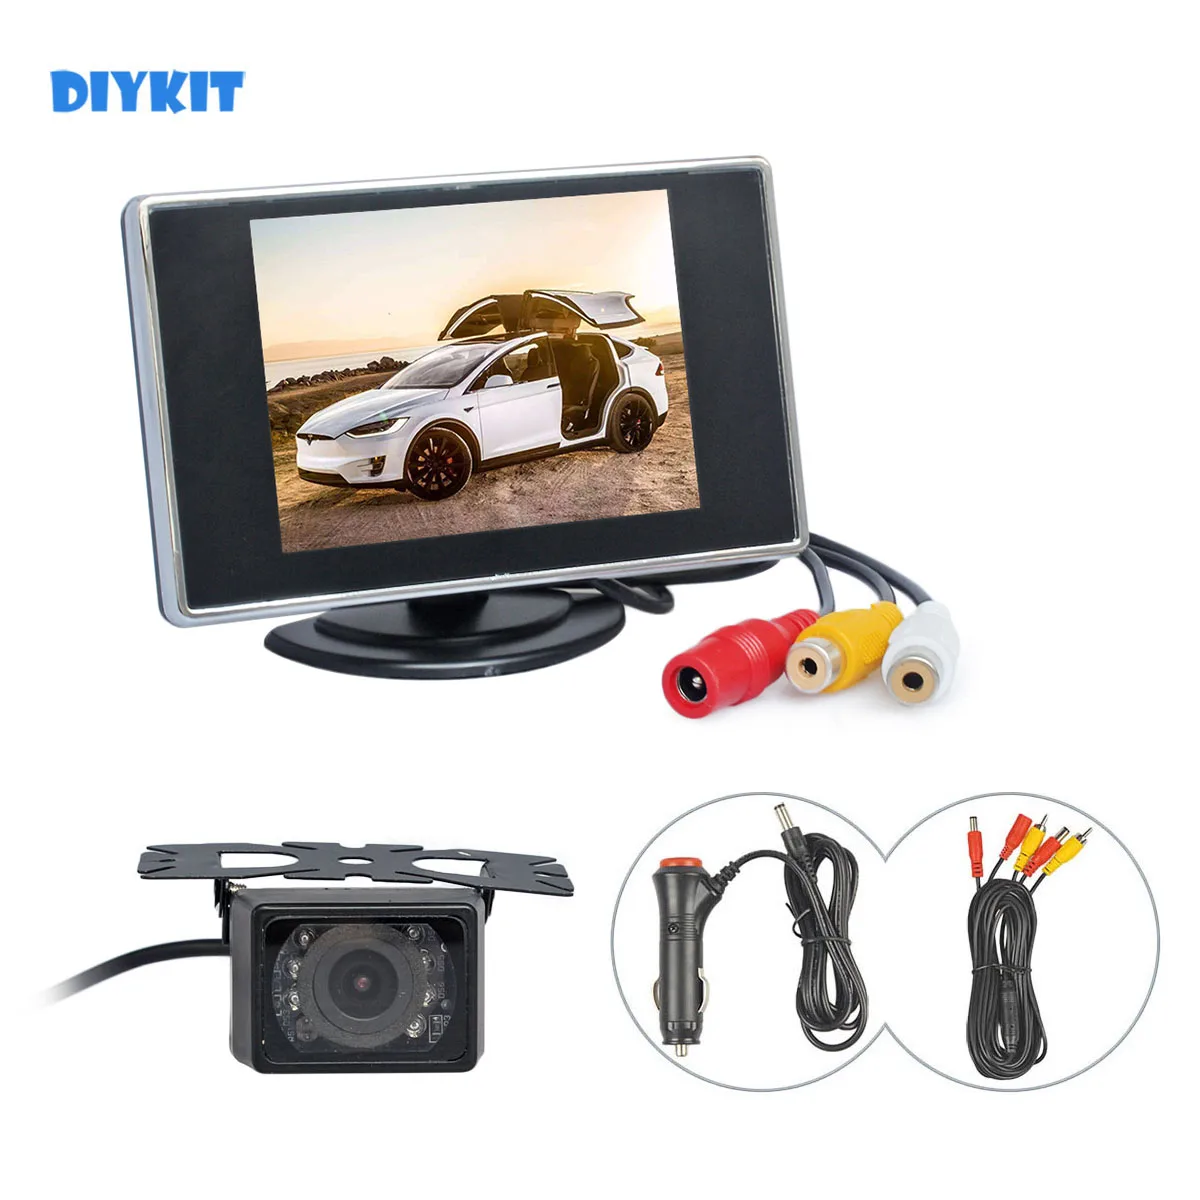 

DIYKIT Wired 3.5" TFT LCD Backup Car Monitor IR Night Vision Rear View Car LED Camera Reversing Camera Parking Assistance System